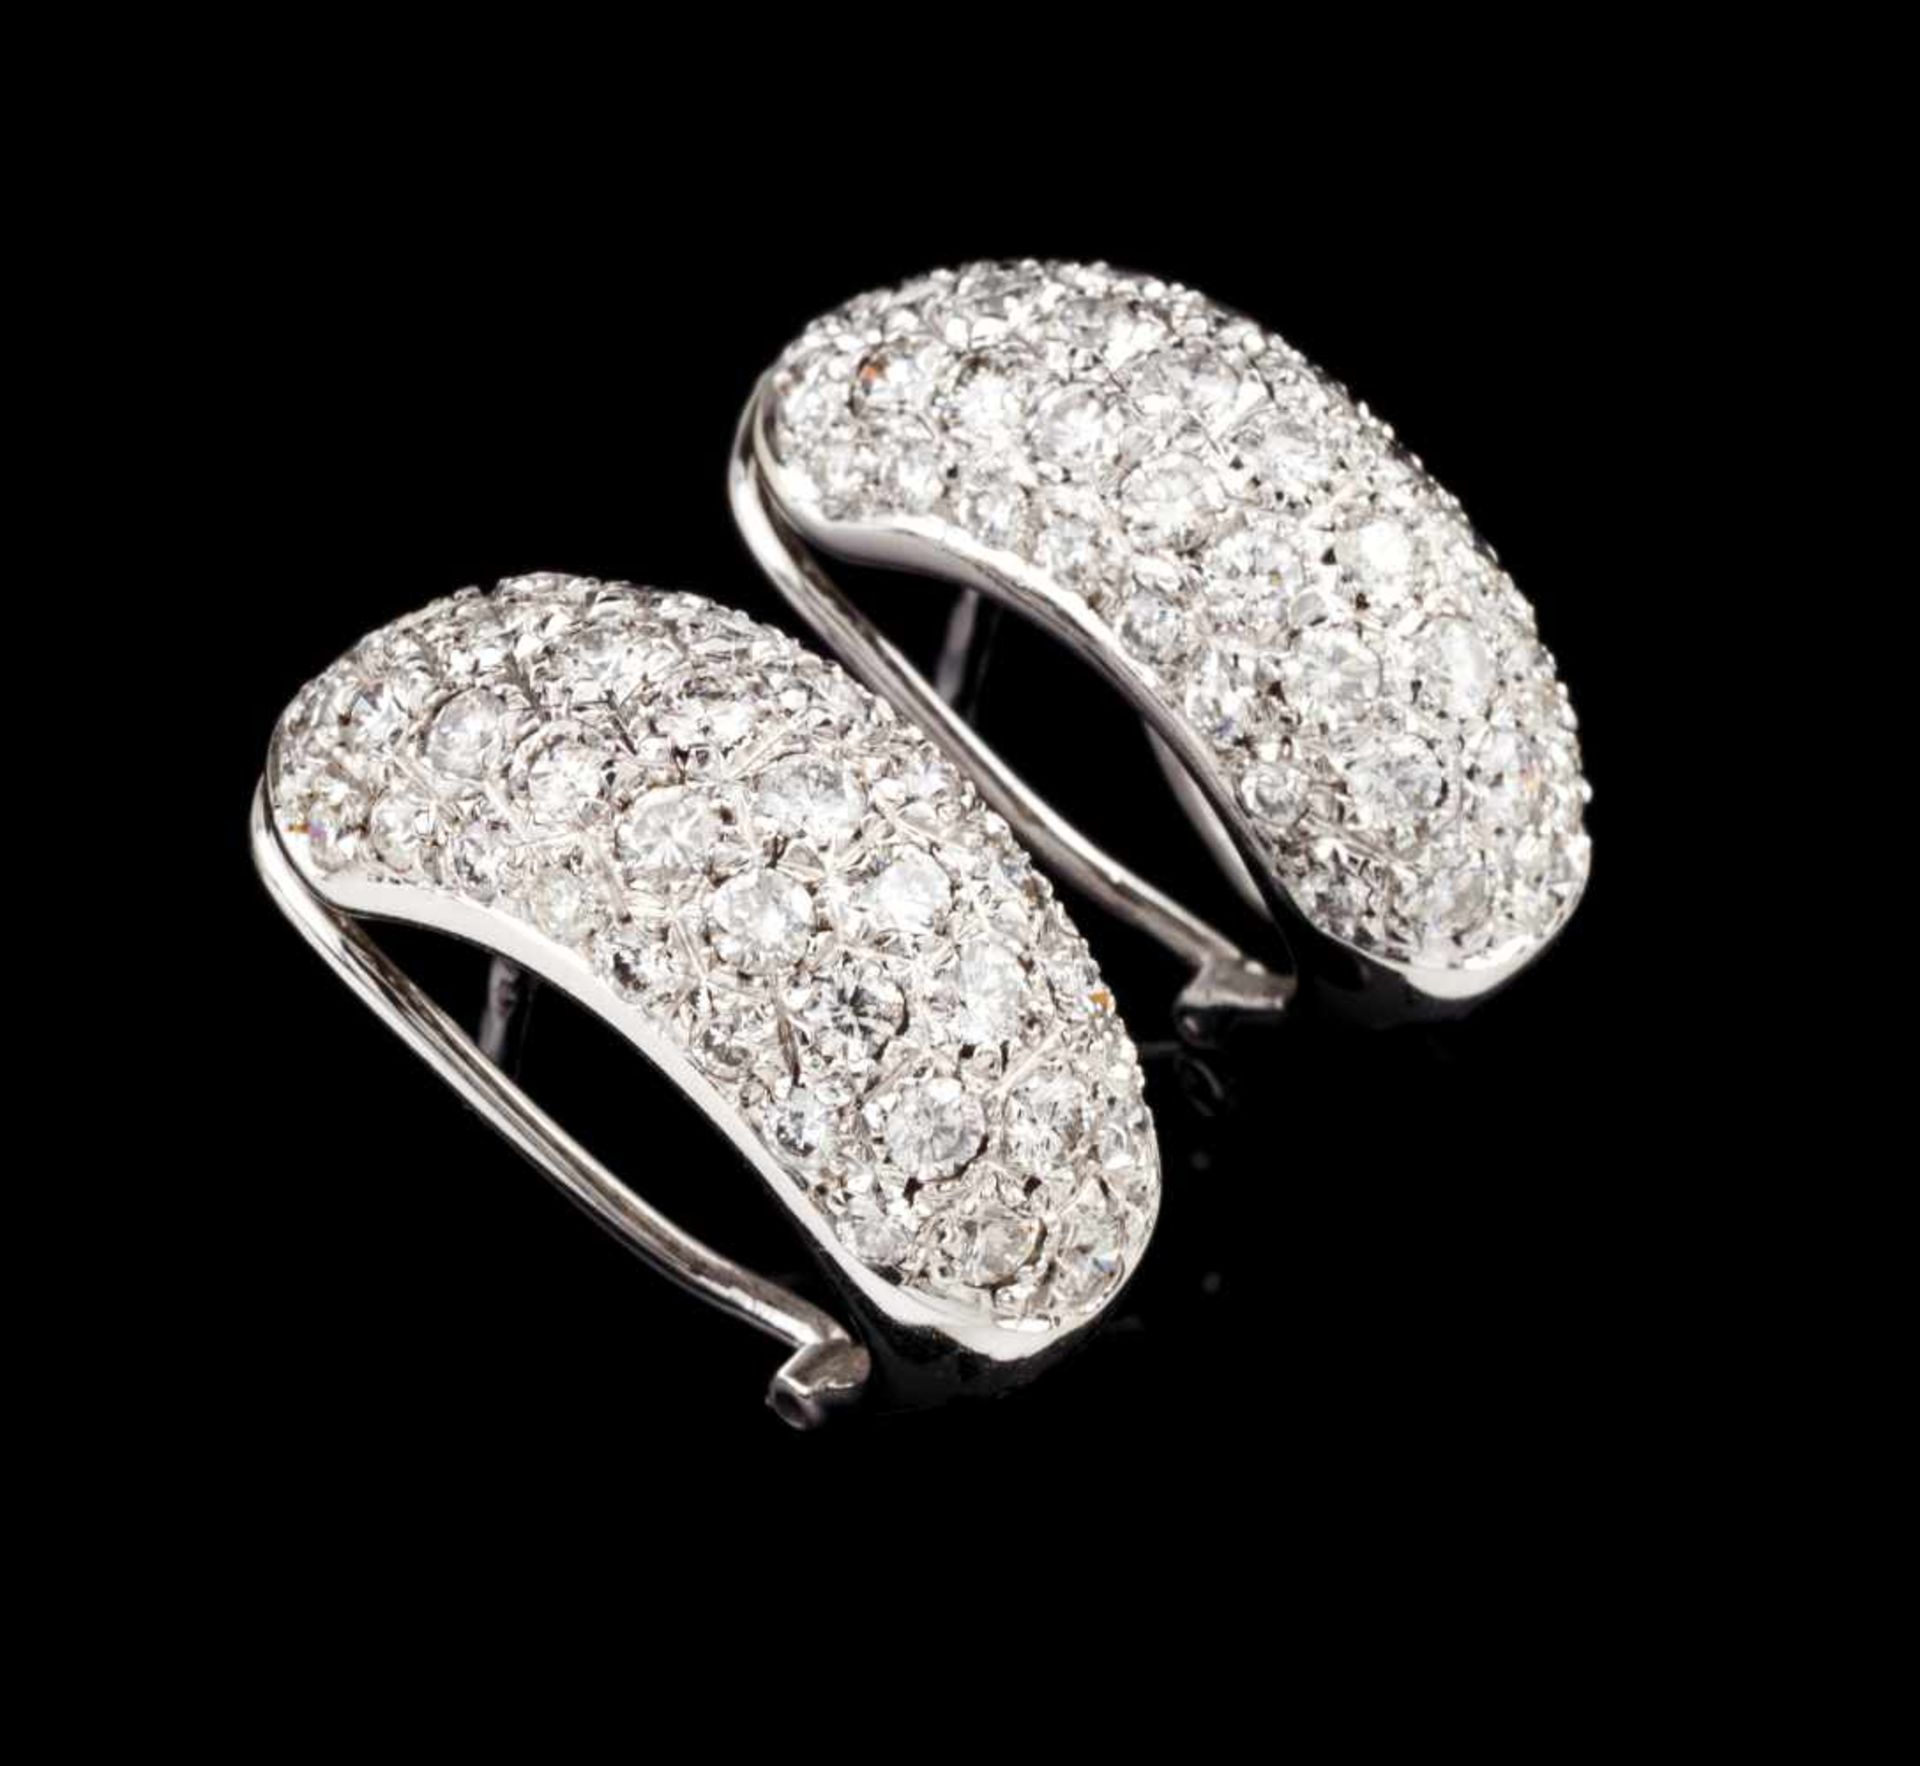 A pair of earrings800/000 goldA round brilliant cut diamond pavé (ca.5.00ct)Oporto assay mark for